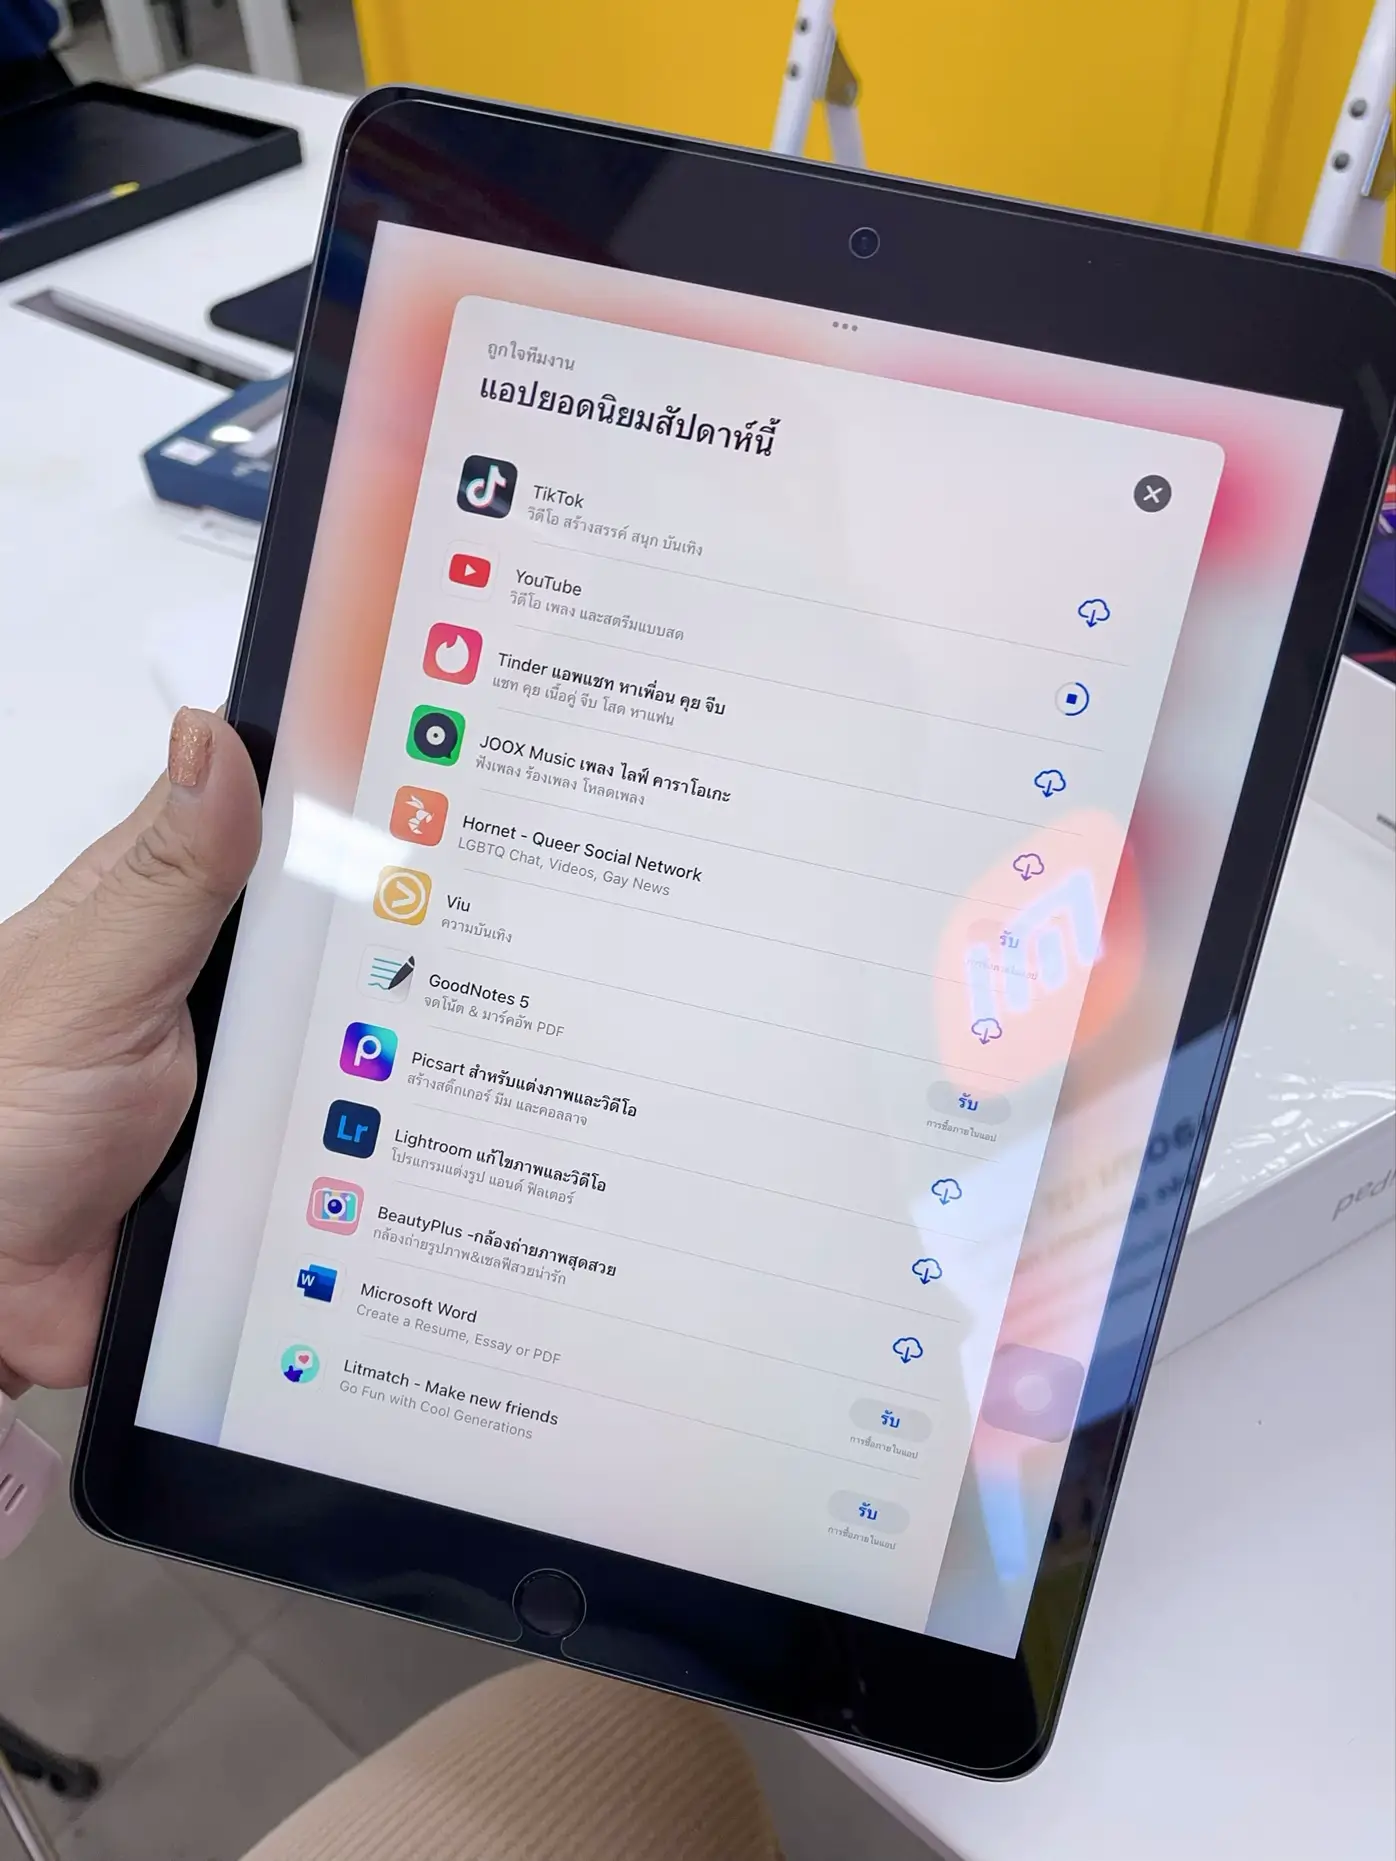 iPad 10.2 Starter Pack